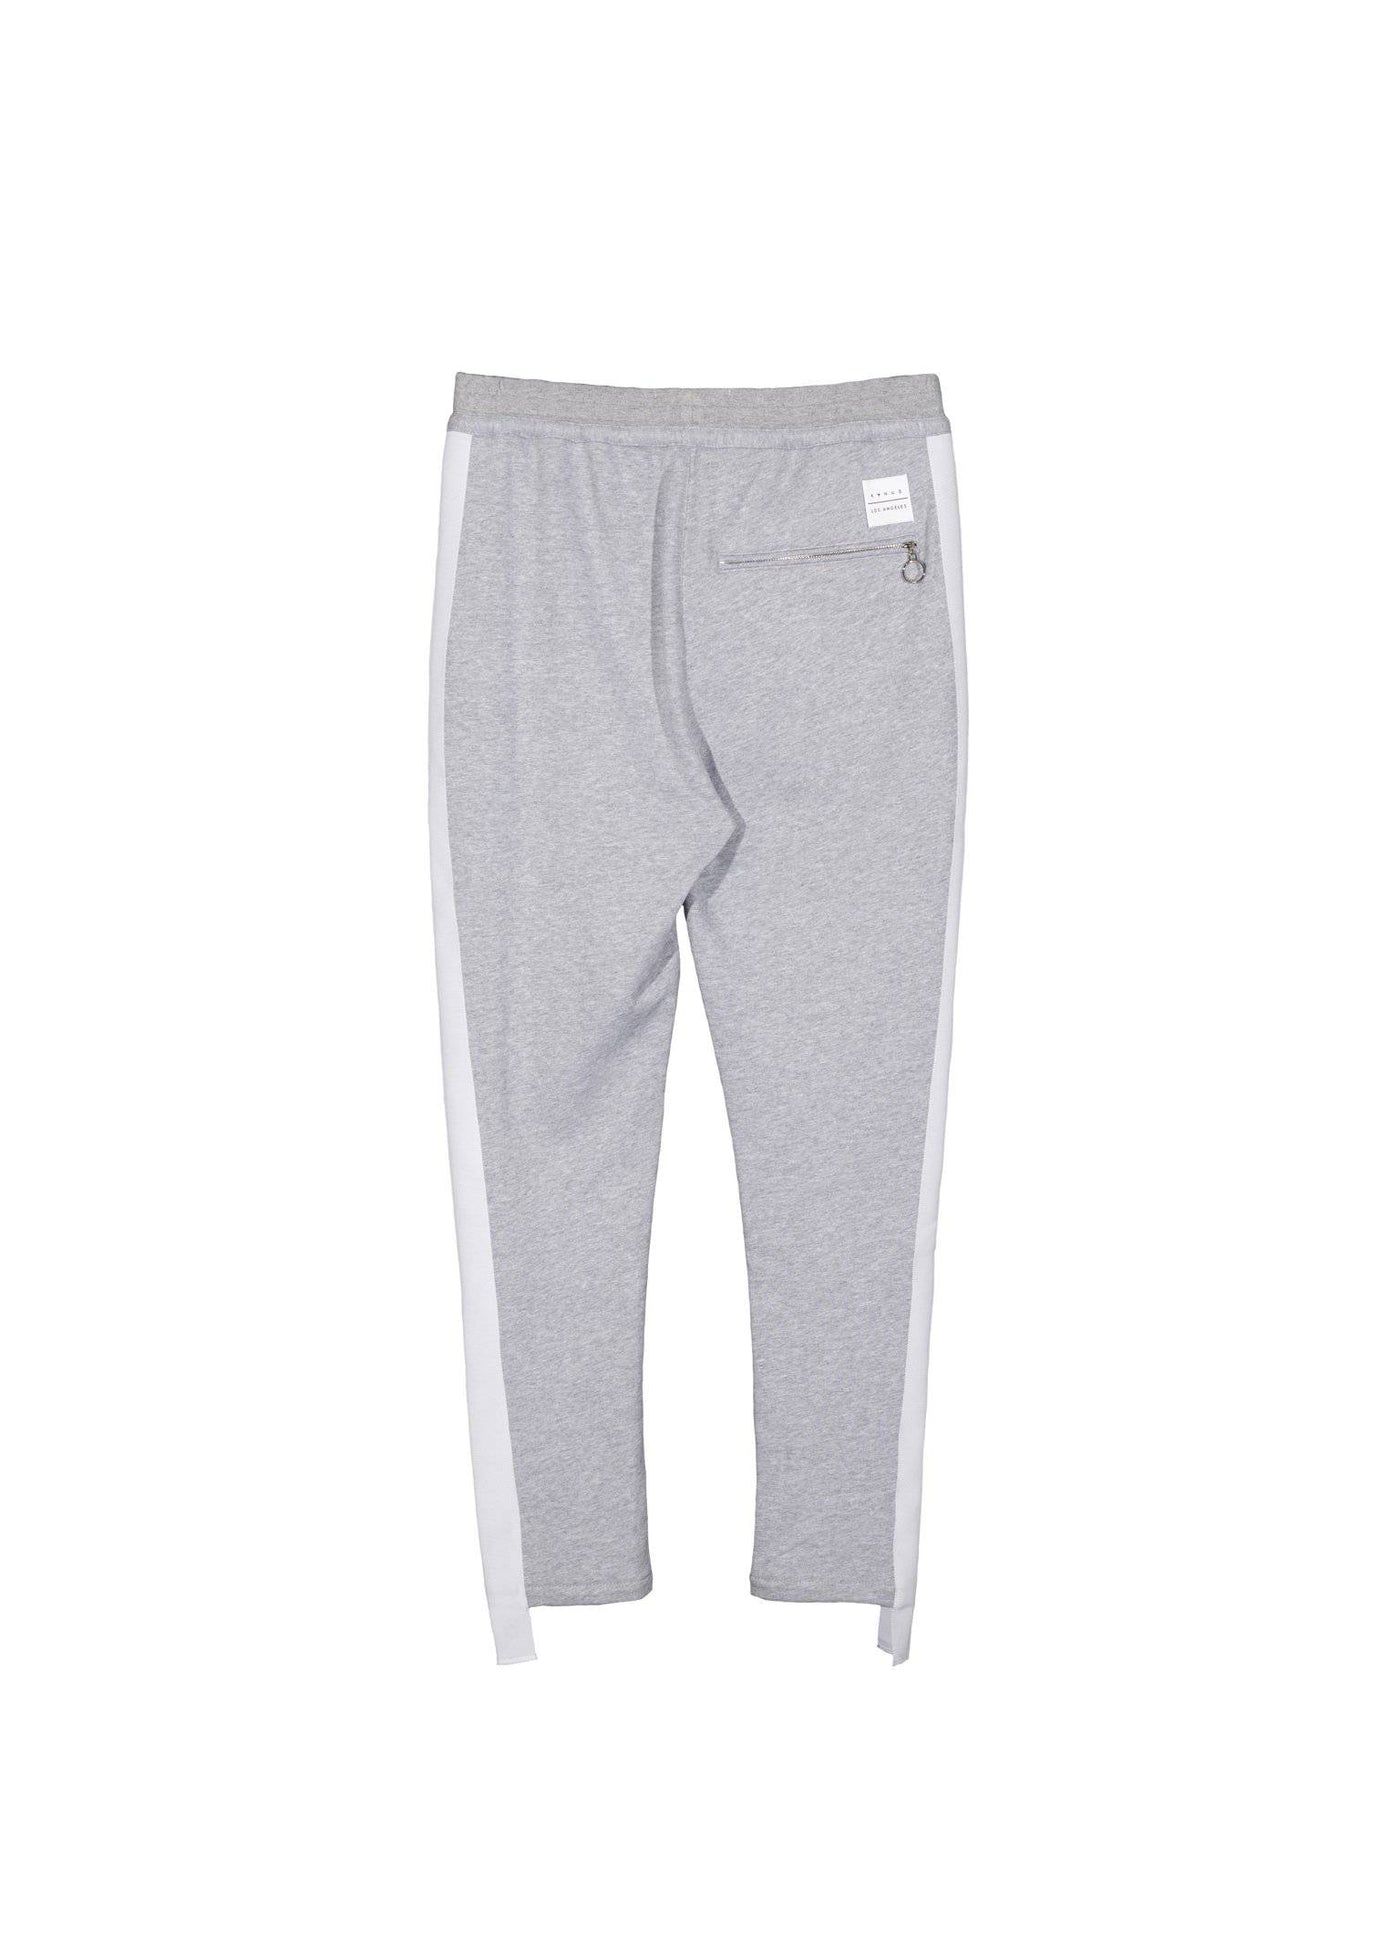 Konus Men's Sweatpants w/ Side Stripes In Grey by Shop at Konus